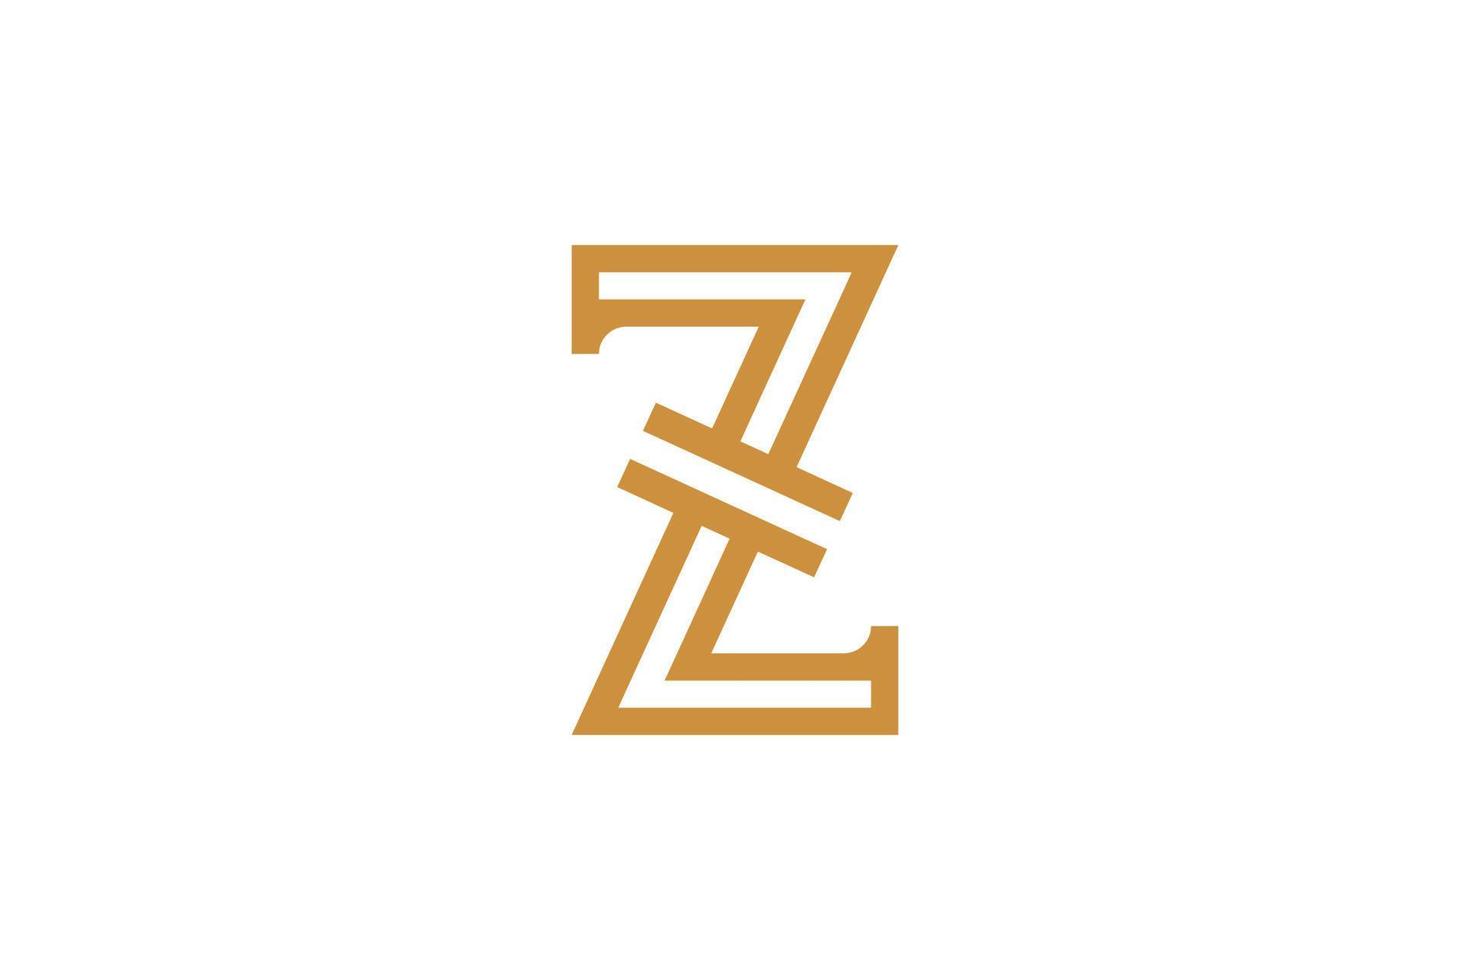 Creative Initial Z Monogram Logo vector